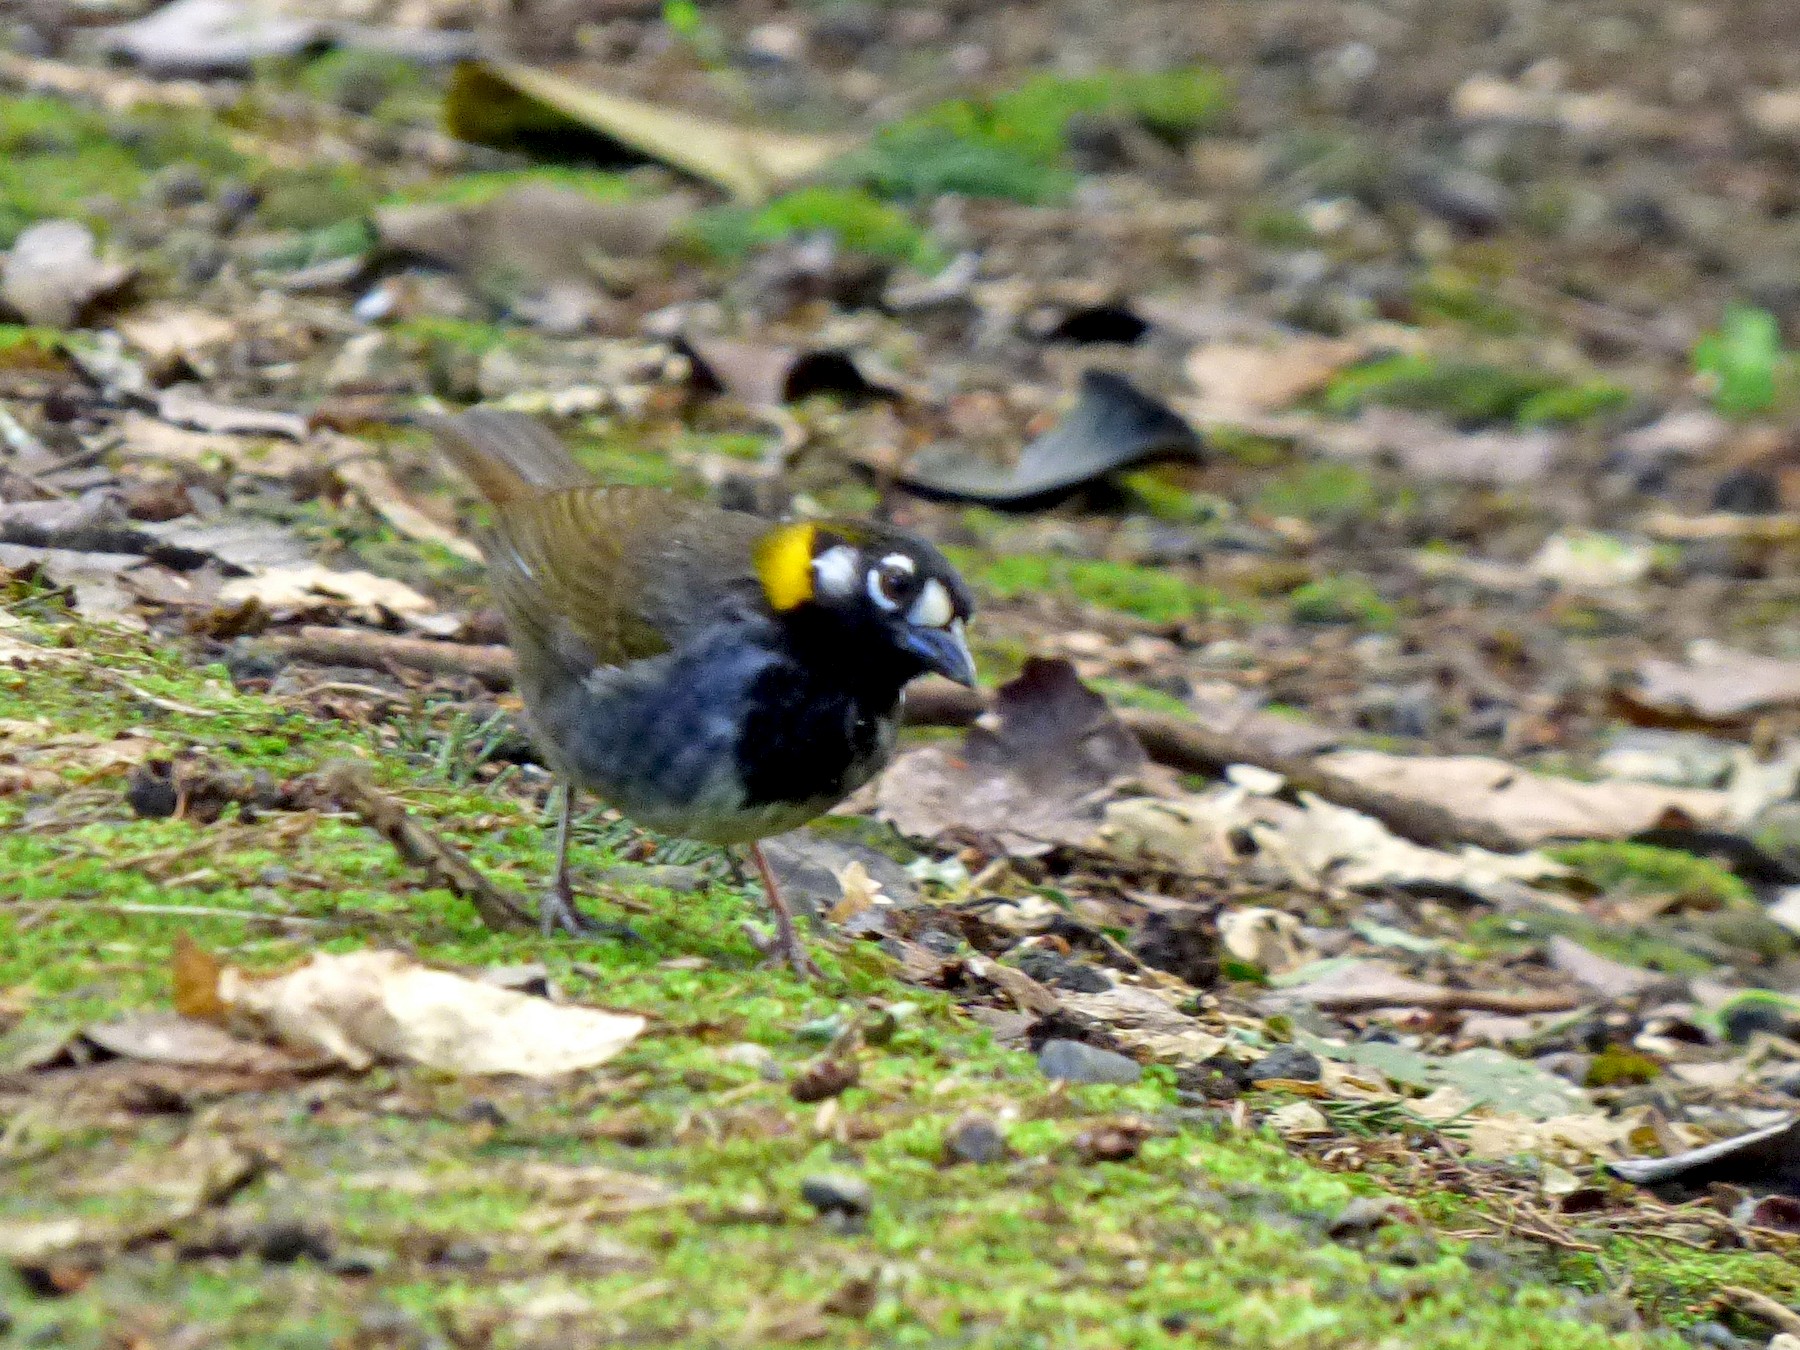 White-eared Ground-Sparrow - Roselvy Juárez